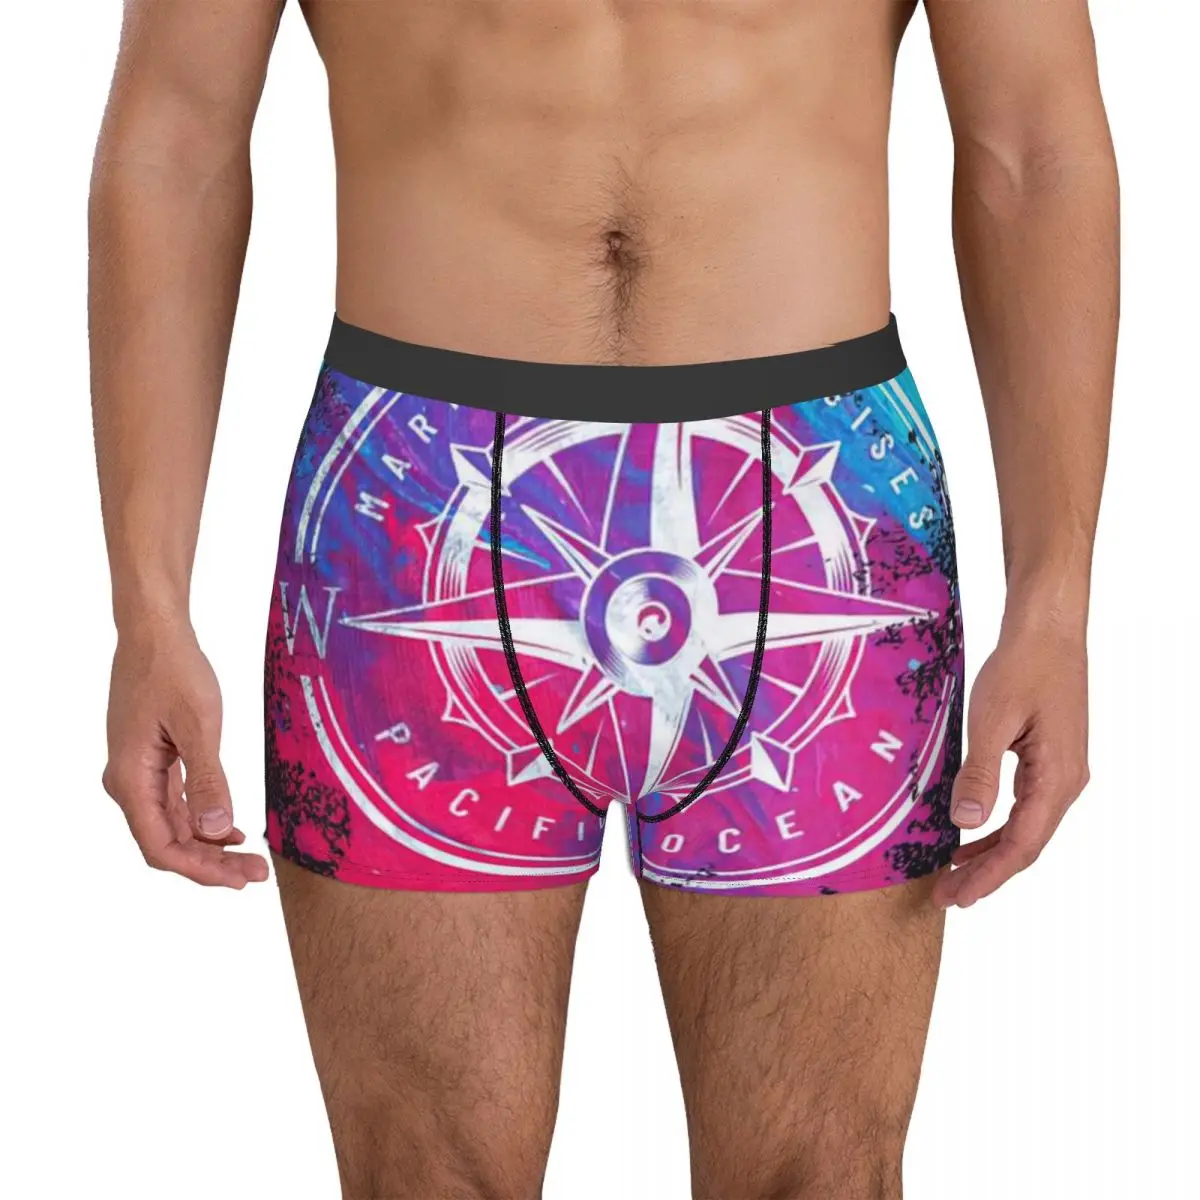 Pacific Ocean Navigato Underpants Breathbale Panties Male Underwear Print Shorts Boxer Briefs